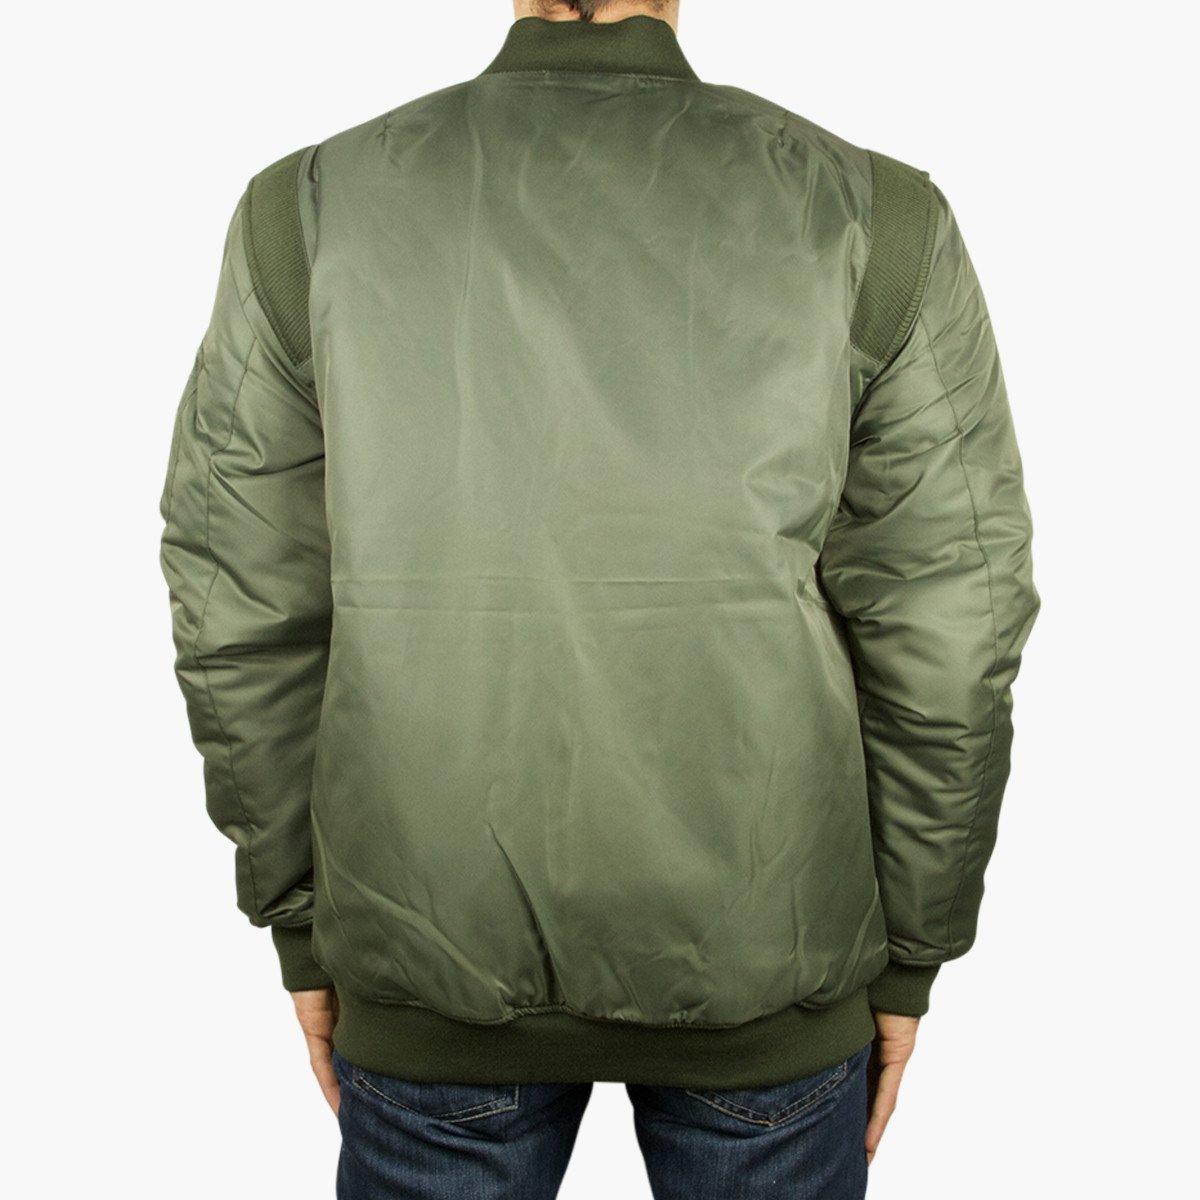 Stussy Ma1 Jacket in Green for Men - Lyst